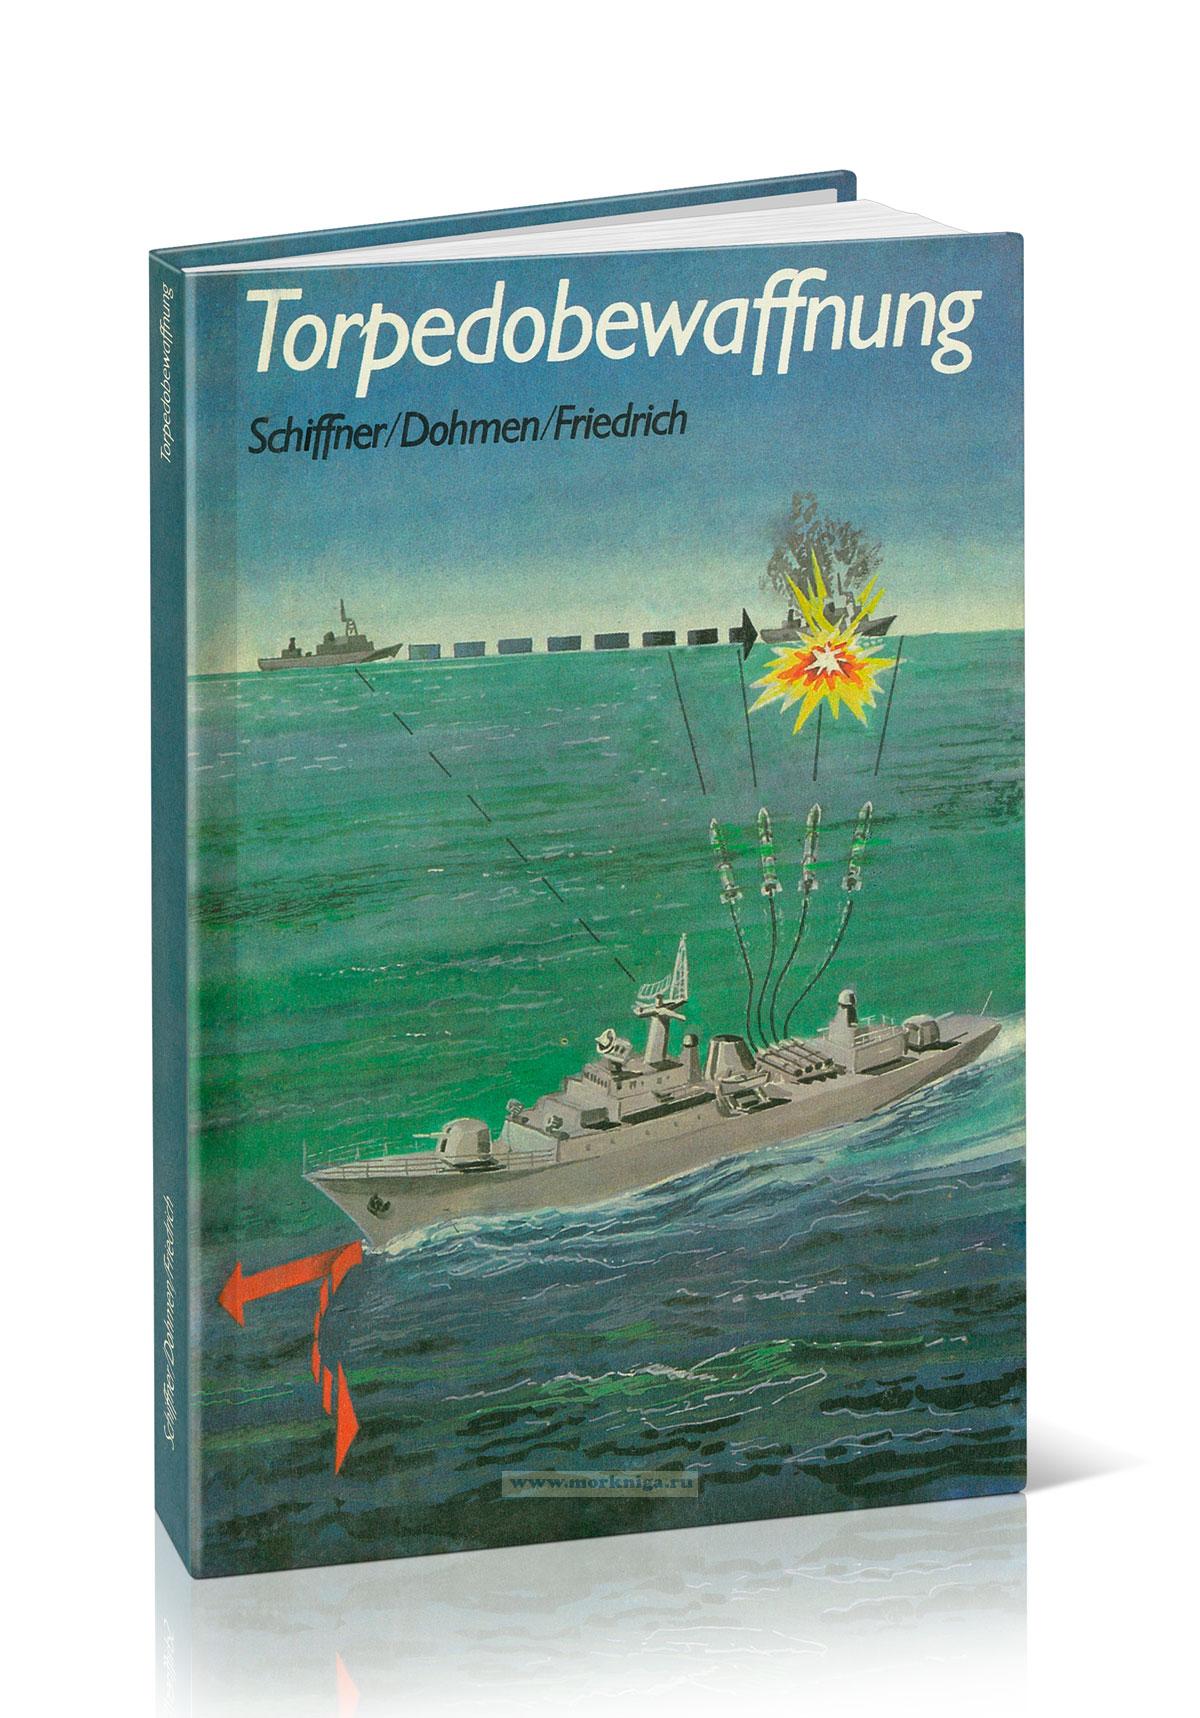 Torpedo-bewaffnung